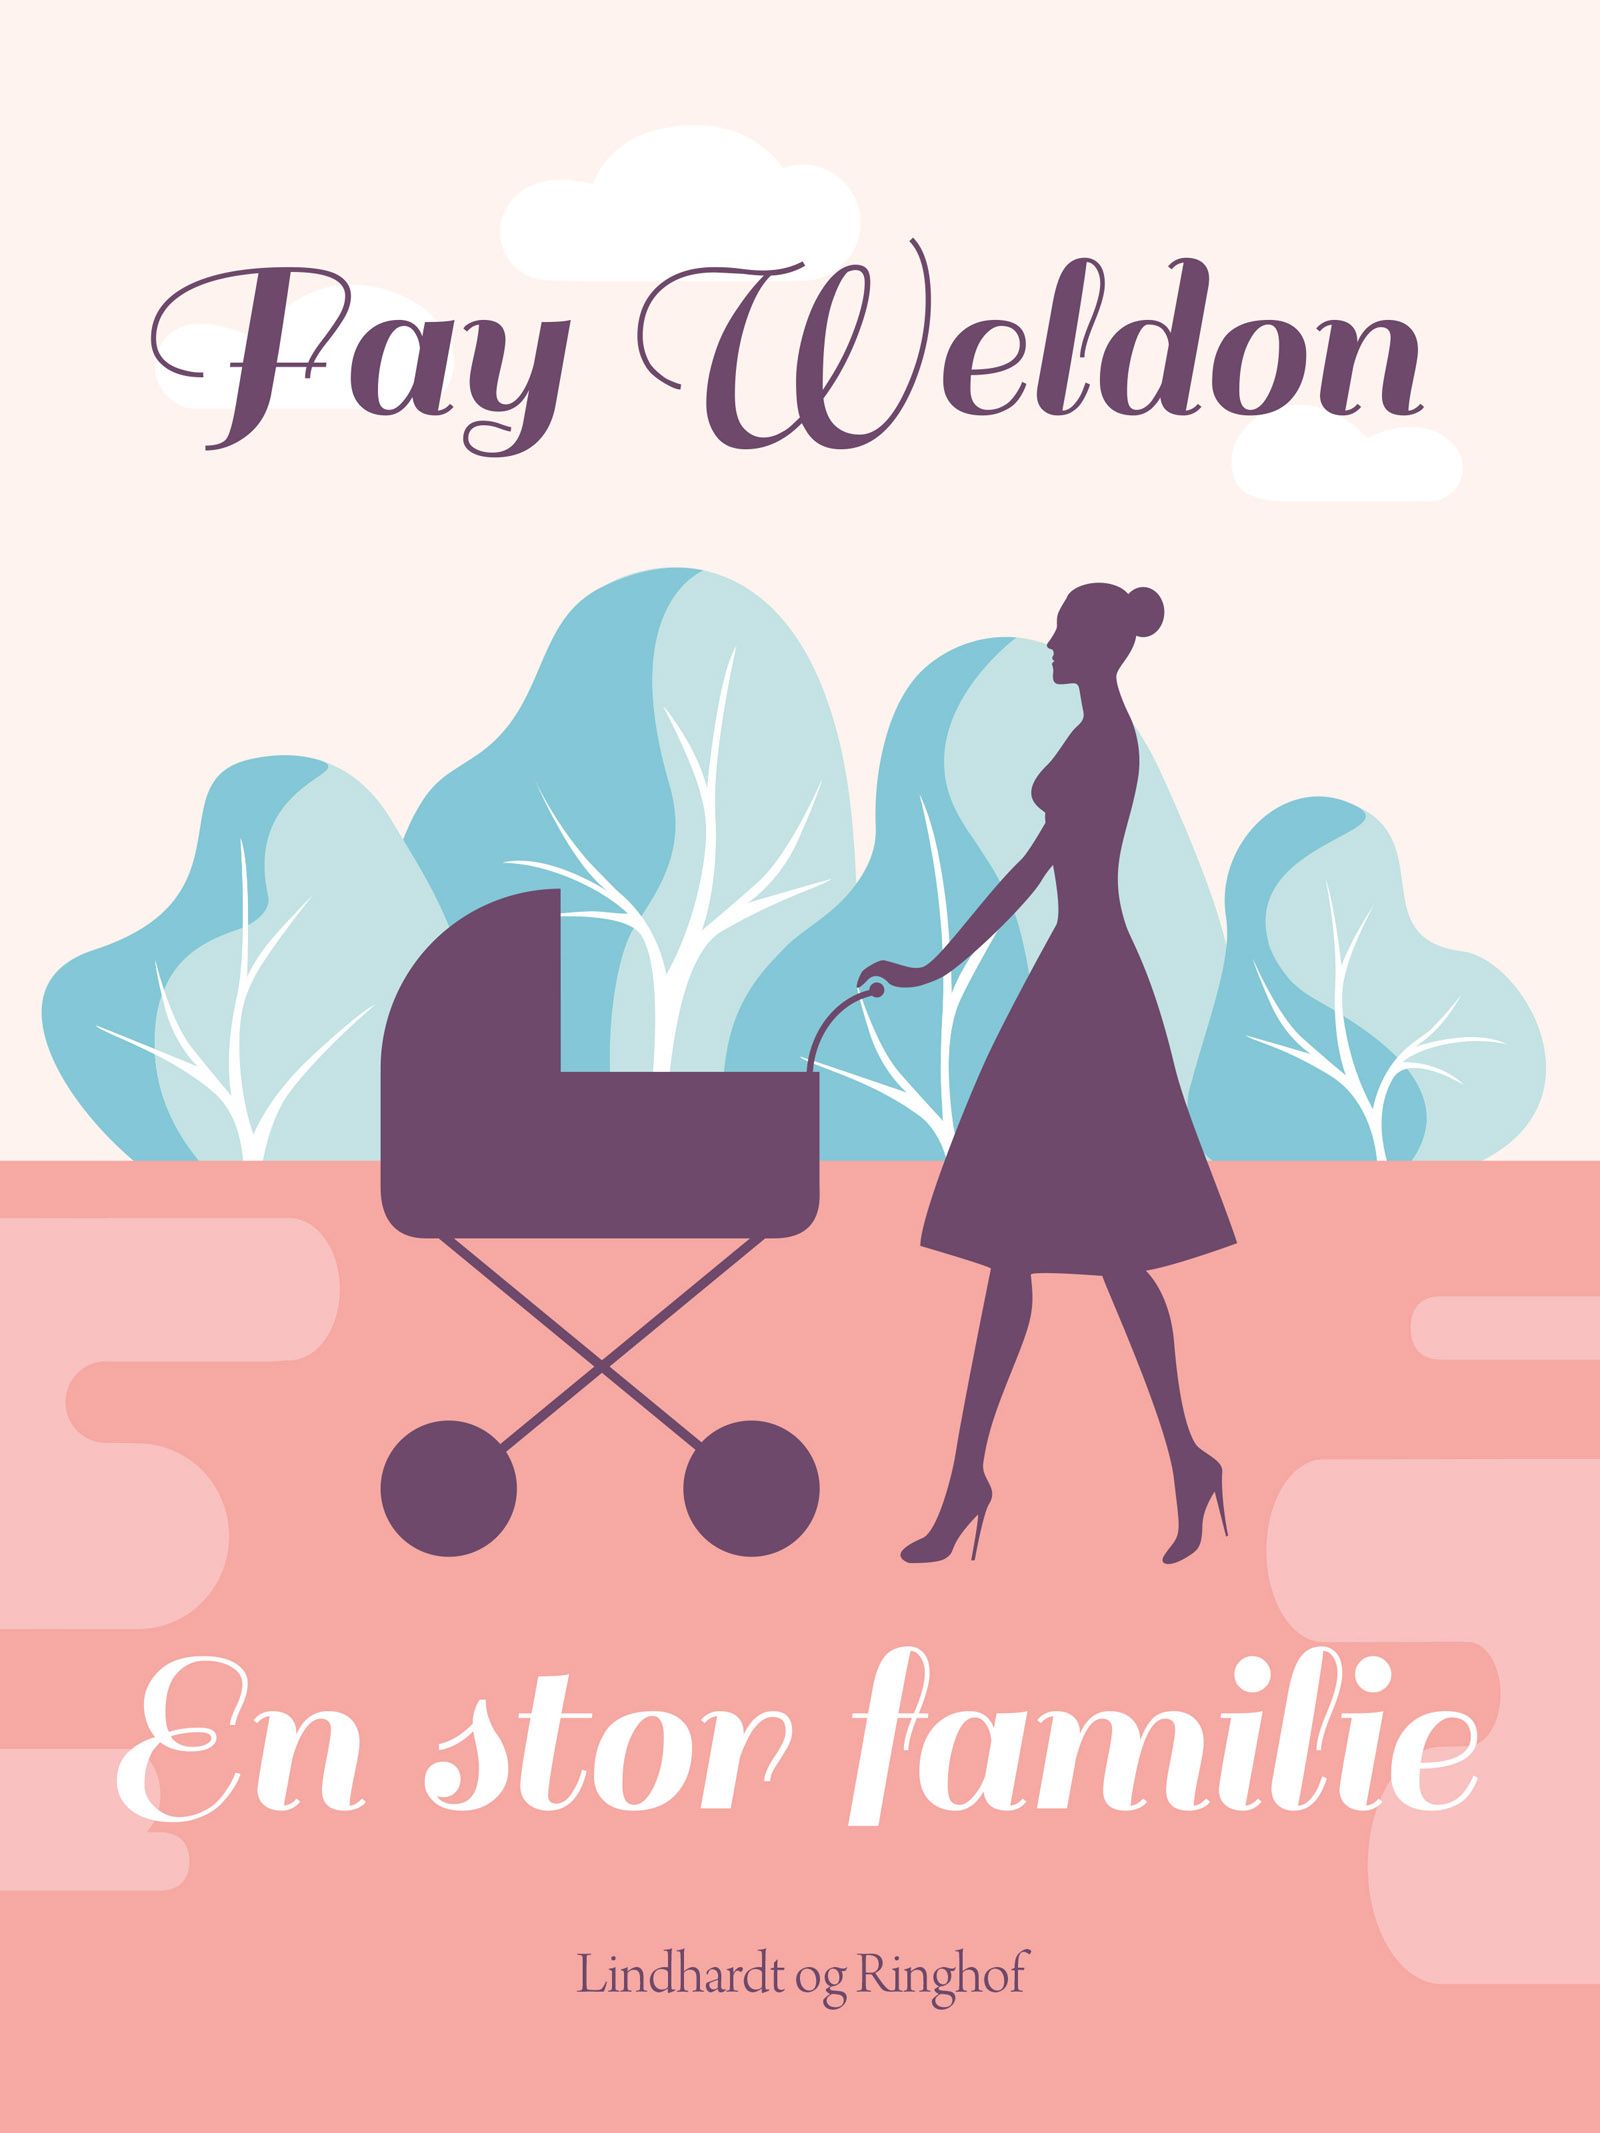 En stor familie, ljudbok av Fay Weldon